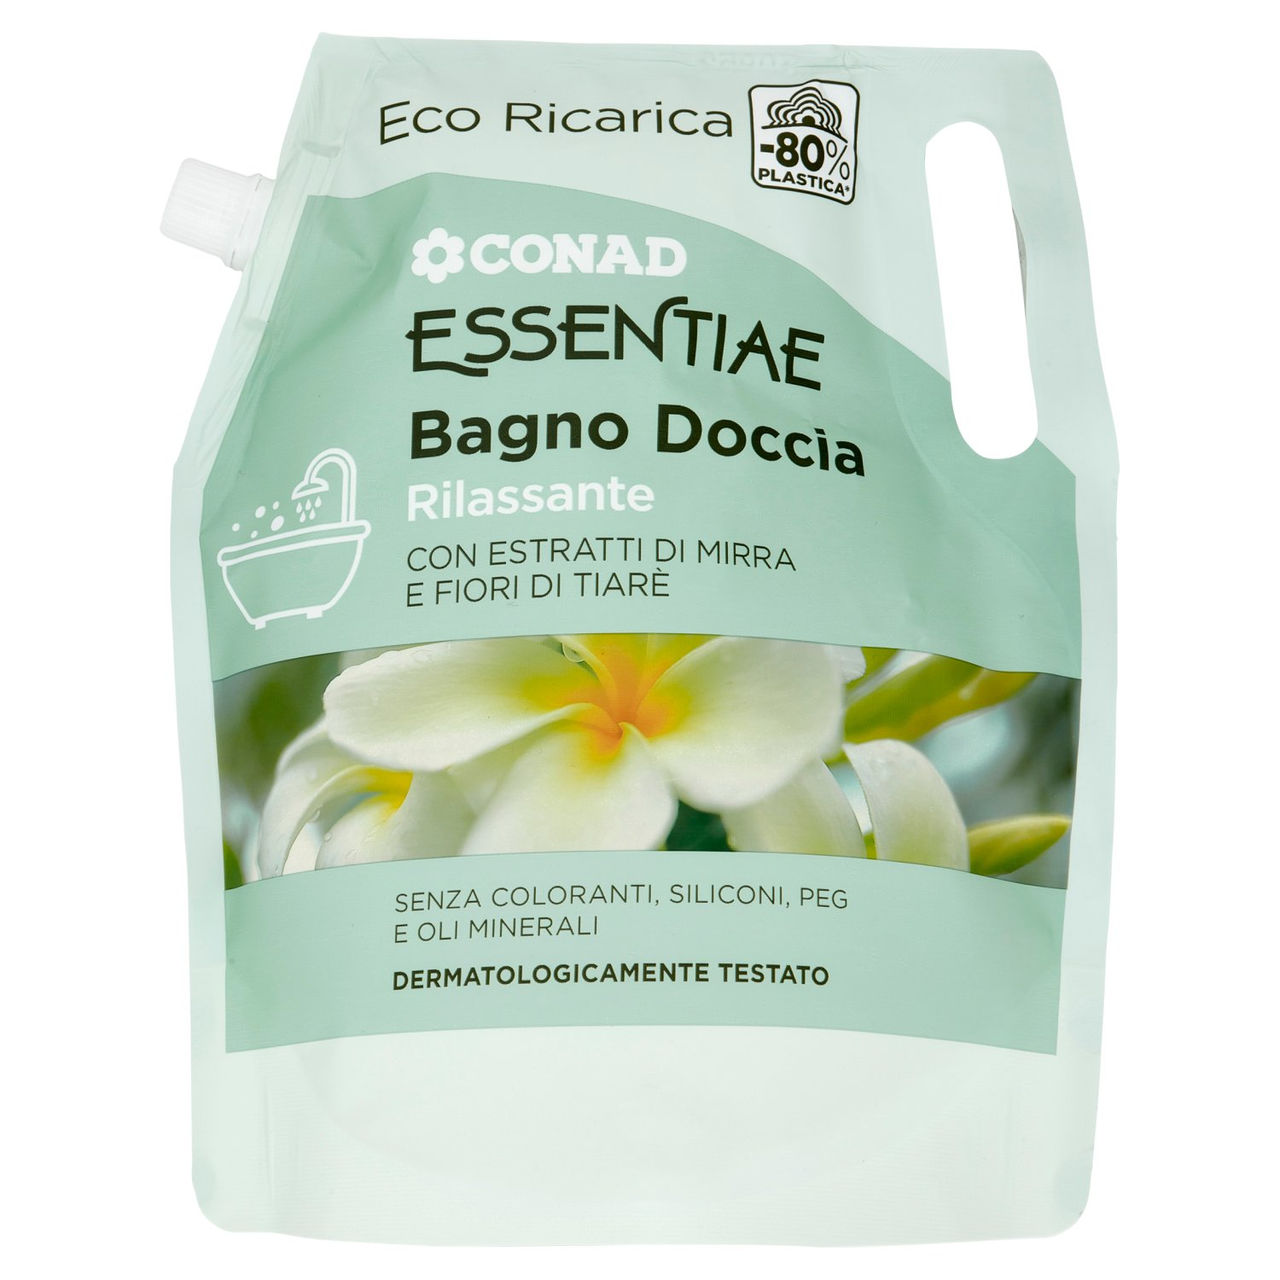 CONAD Essentiae Bagno Doccia Rilassante Eco Ricarica 1200 ml